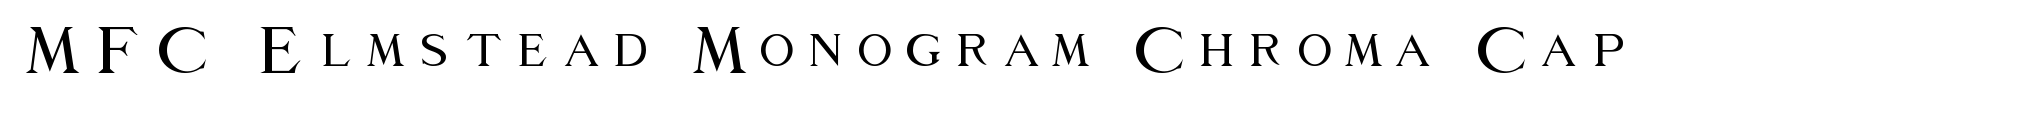 MFC Elmstead Monogram Chroma Cap image